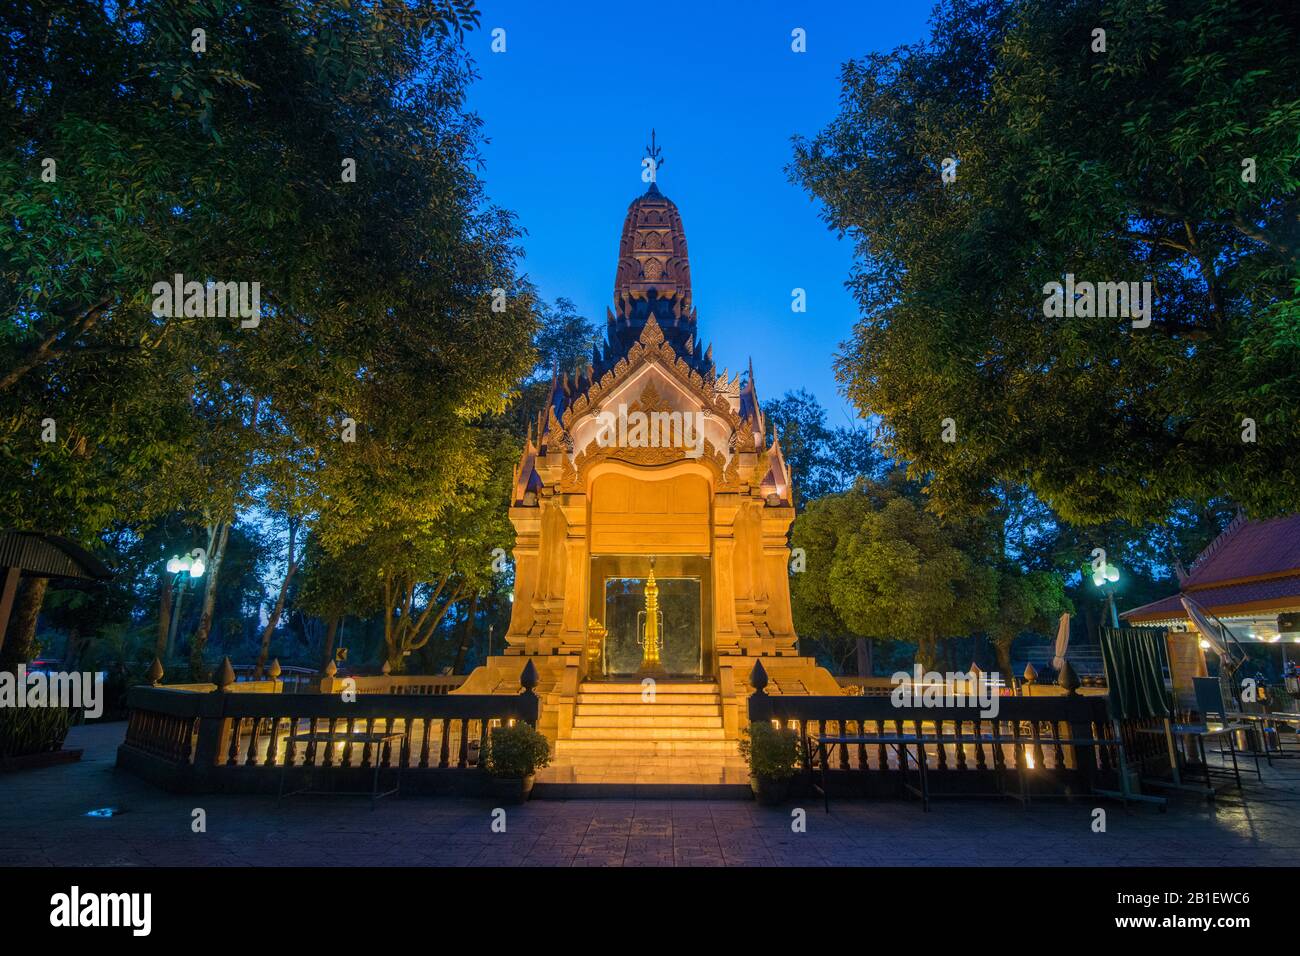 The City pillar Shrine in of the town of Kamphaeng Phet in the Kamphaeng Phet Province in North Thailand.   Thailand, Kamphaeng Phet, November, 2019 Stock Photo